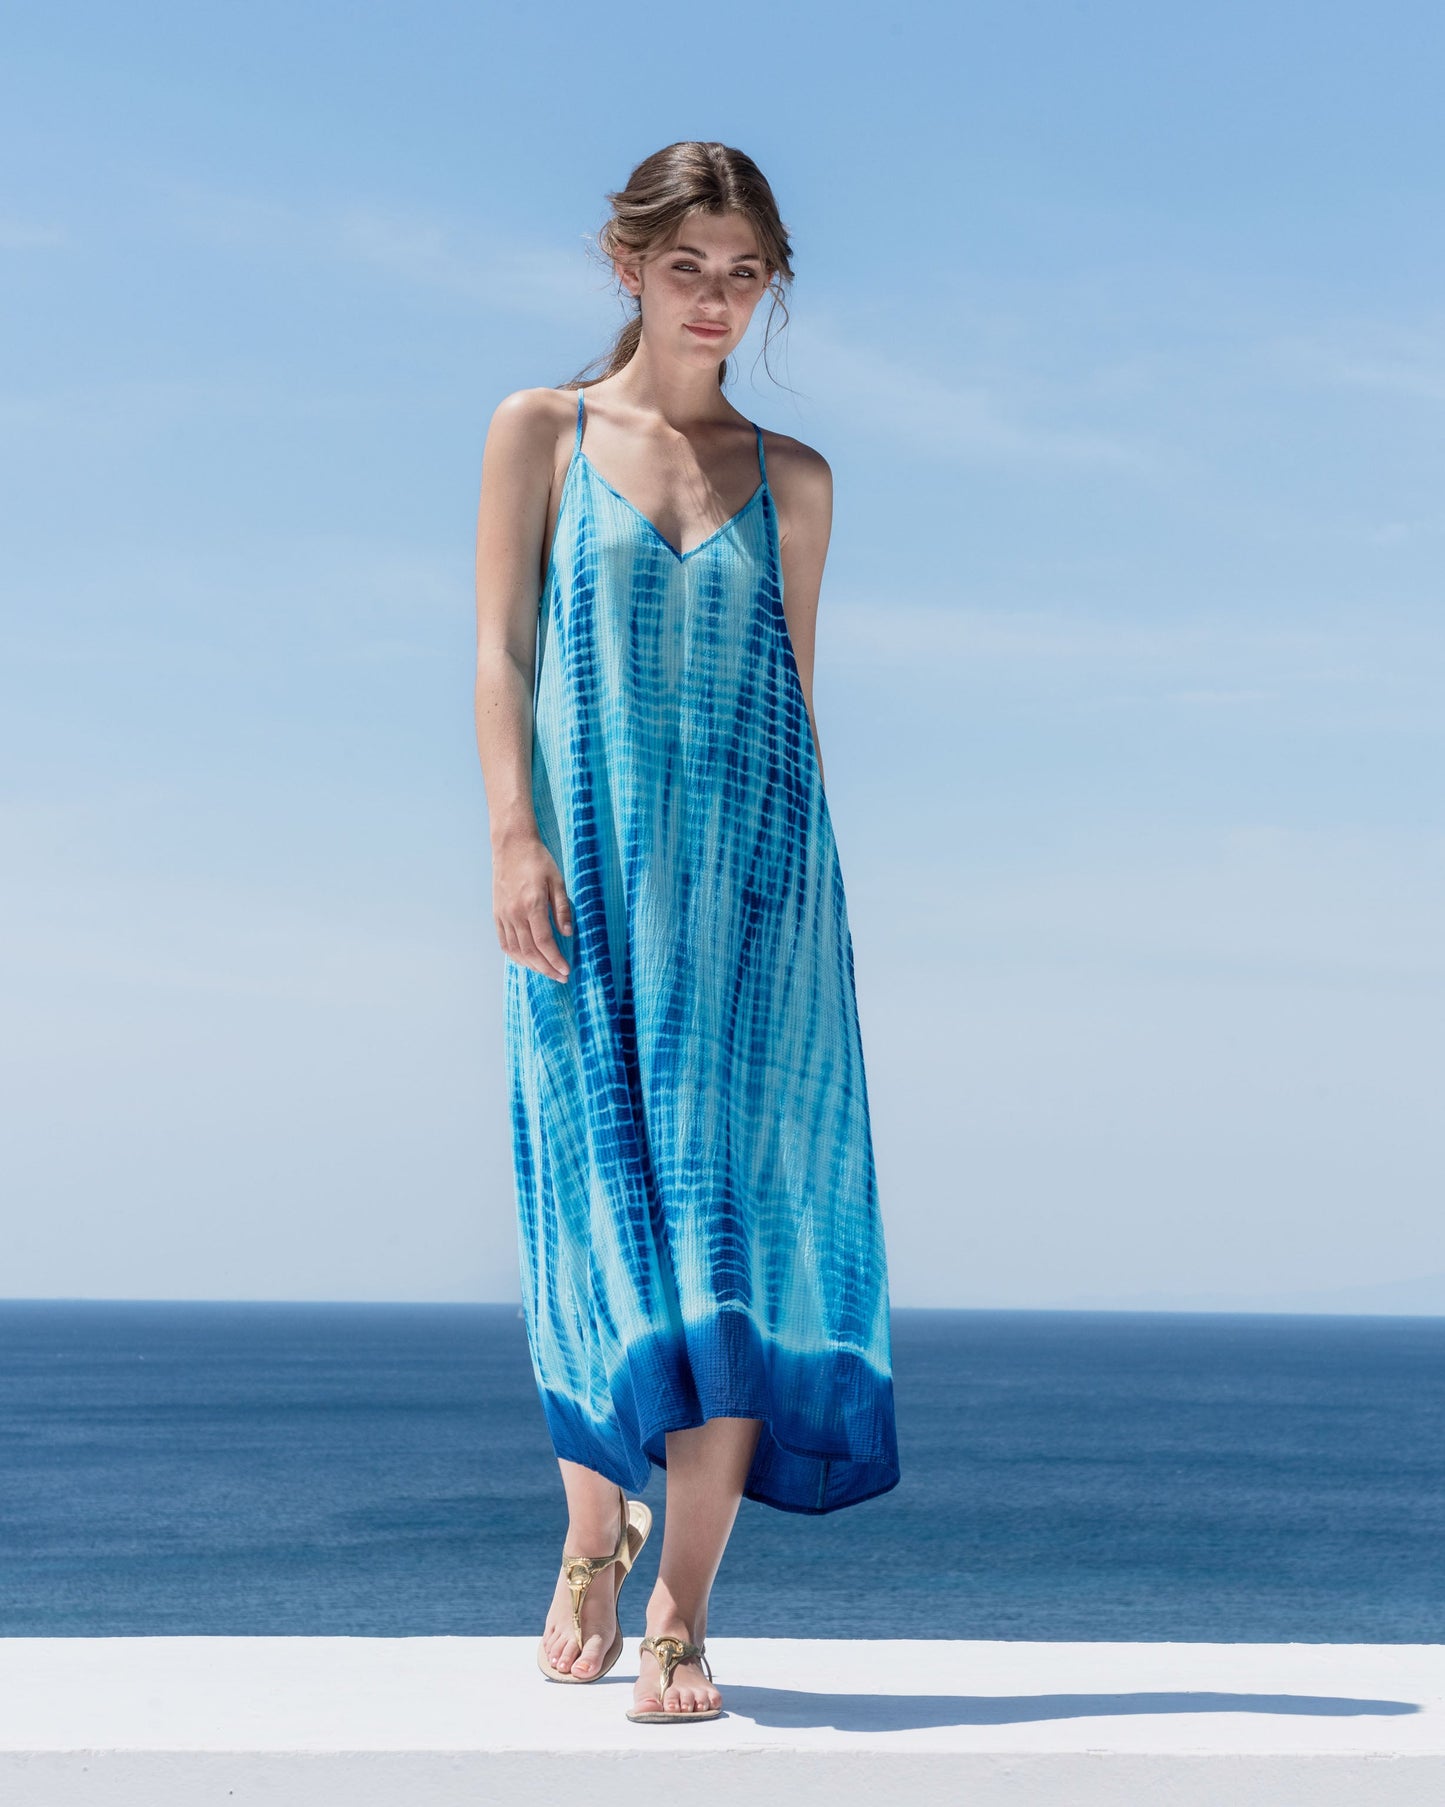 Cyclamen Dress - Premium  from Marina St Barth - Just $495! Shop now at Marina St Barth